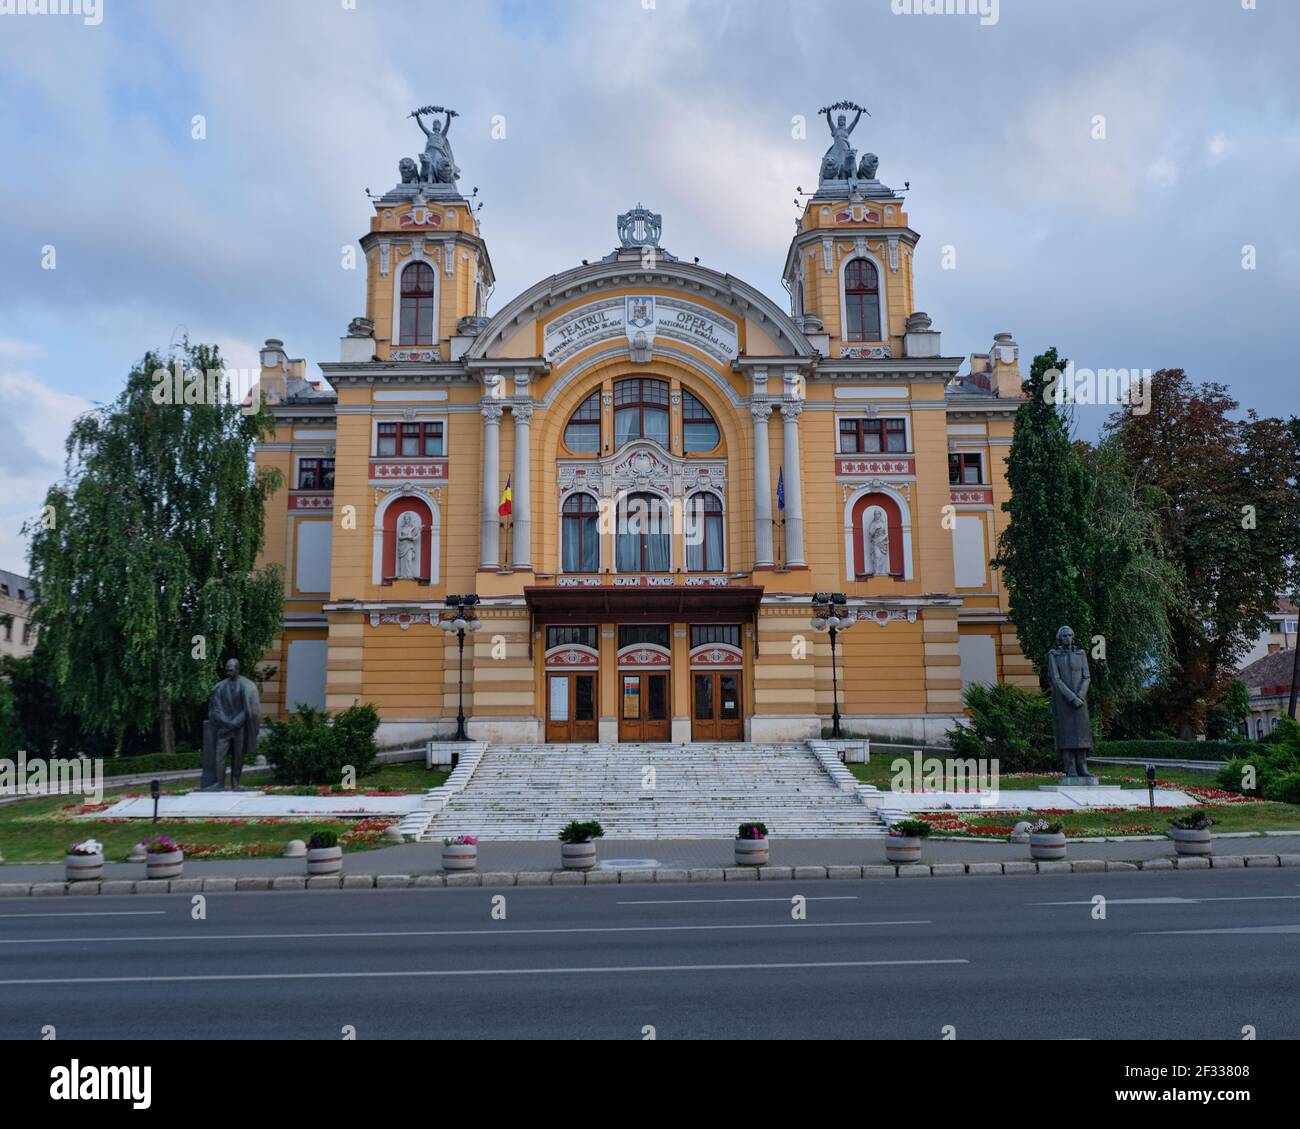 Rumänische Nationaloper, Cluj-Napoca Gebäude, in neobarocker Architektur Stockfoto